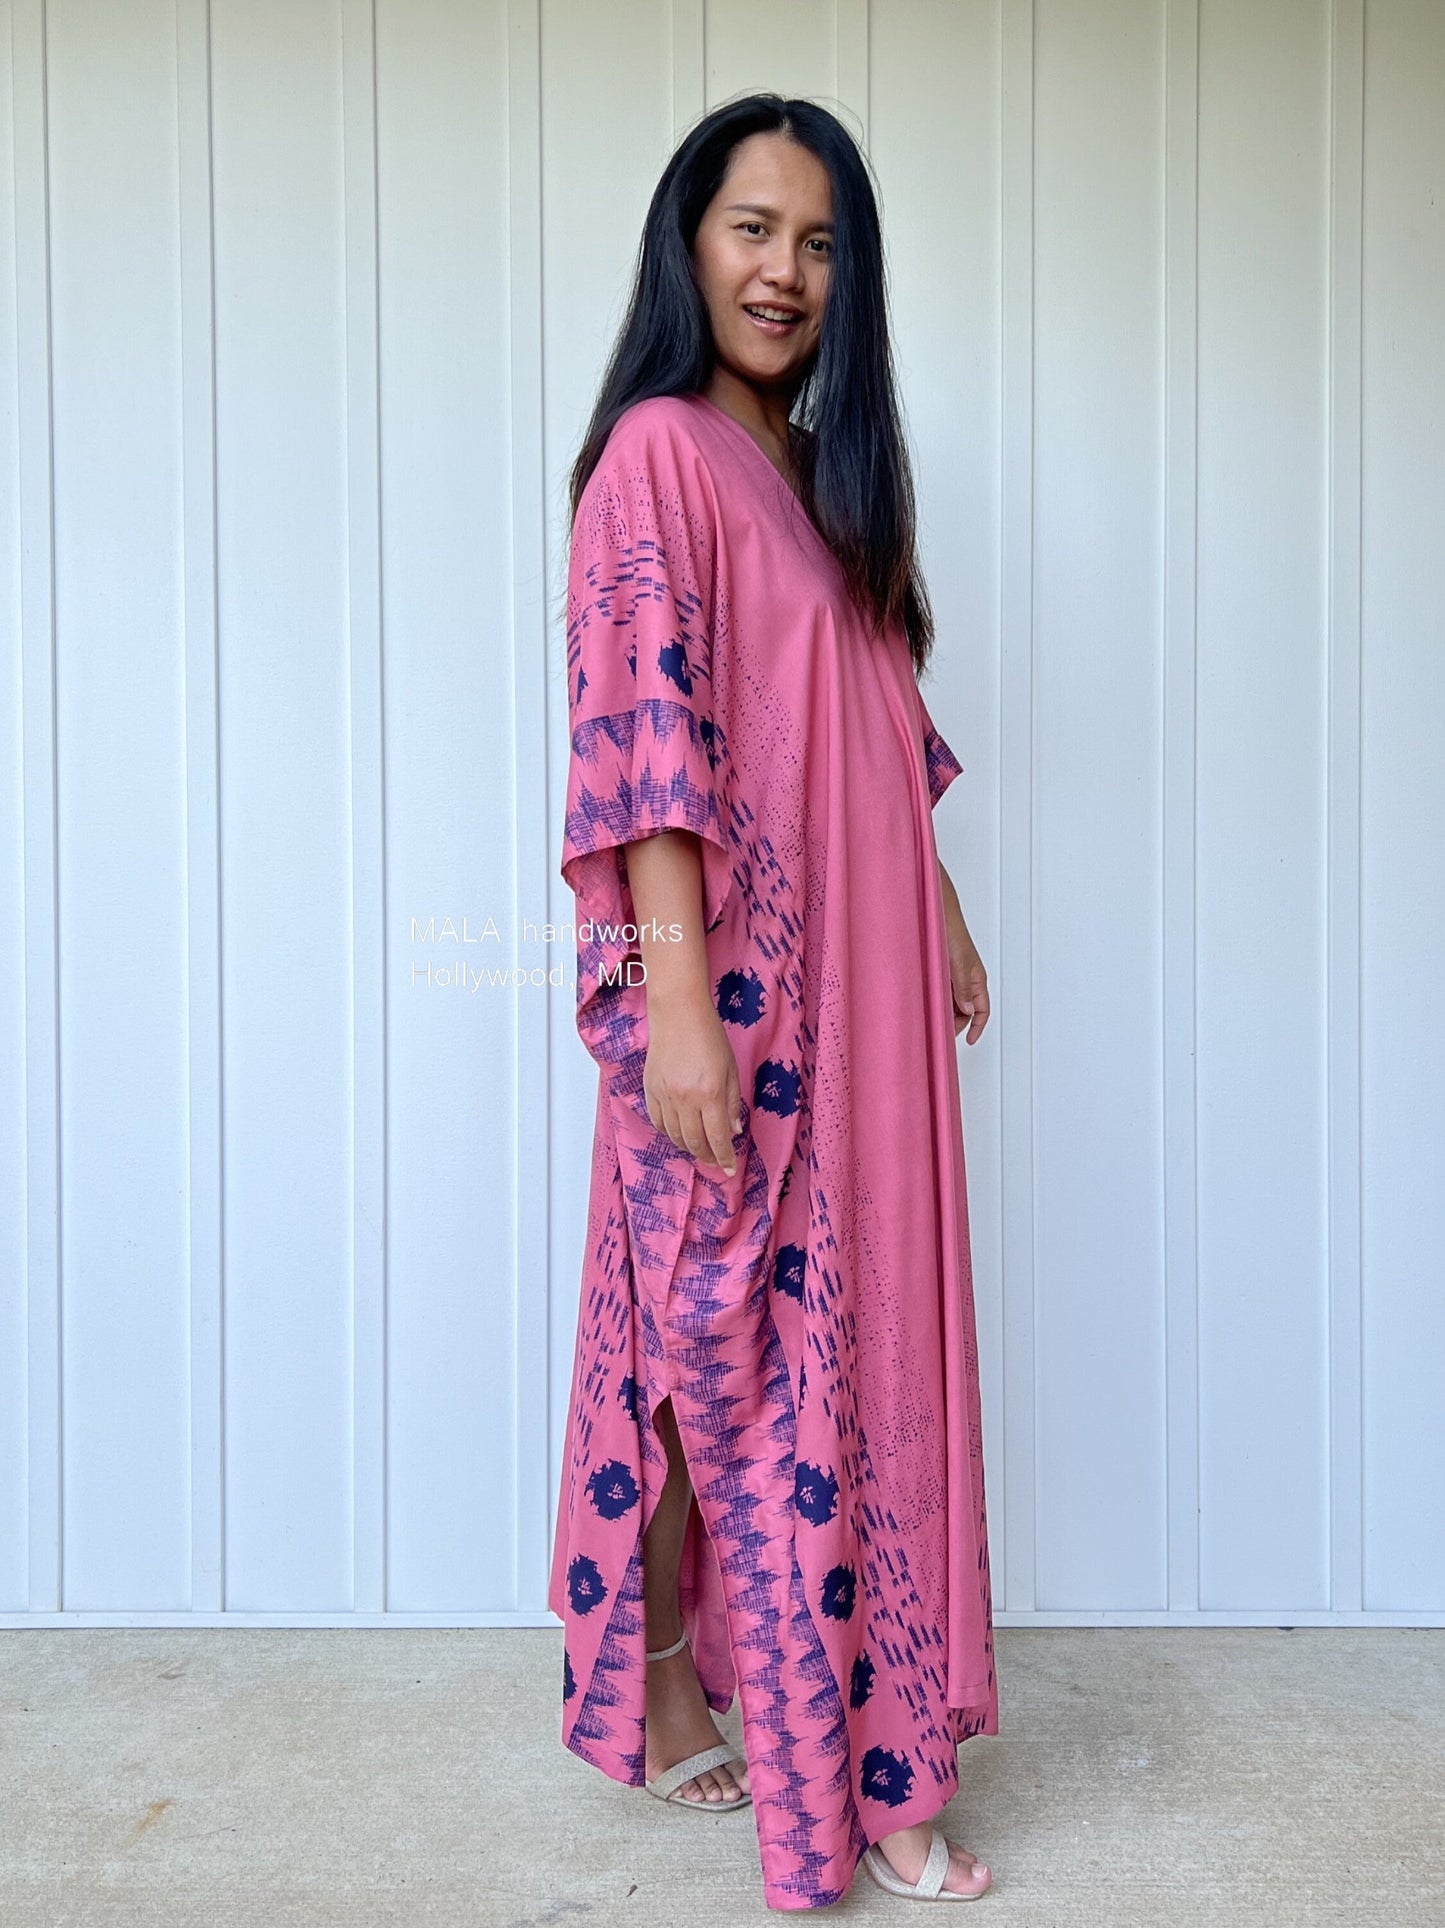 MALA handworks  Camila Kaftan in Pink and Blue Silkscreen Pattern